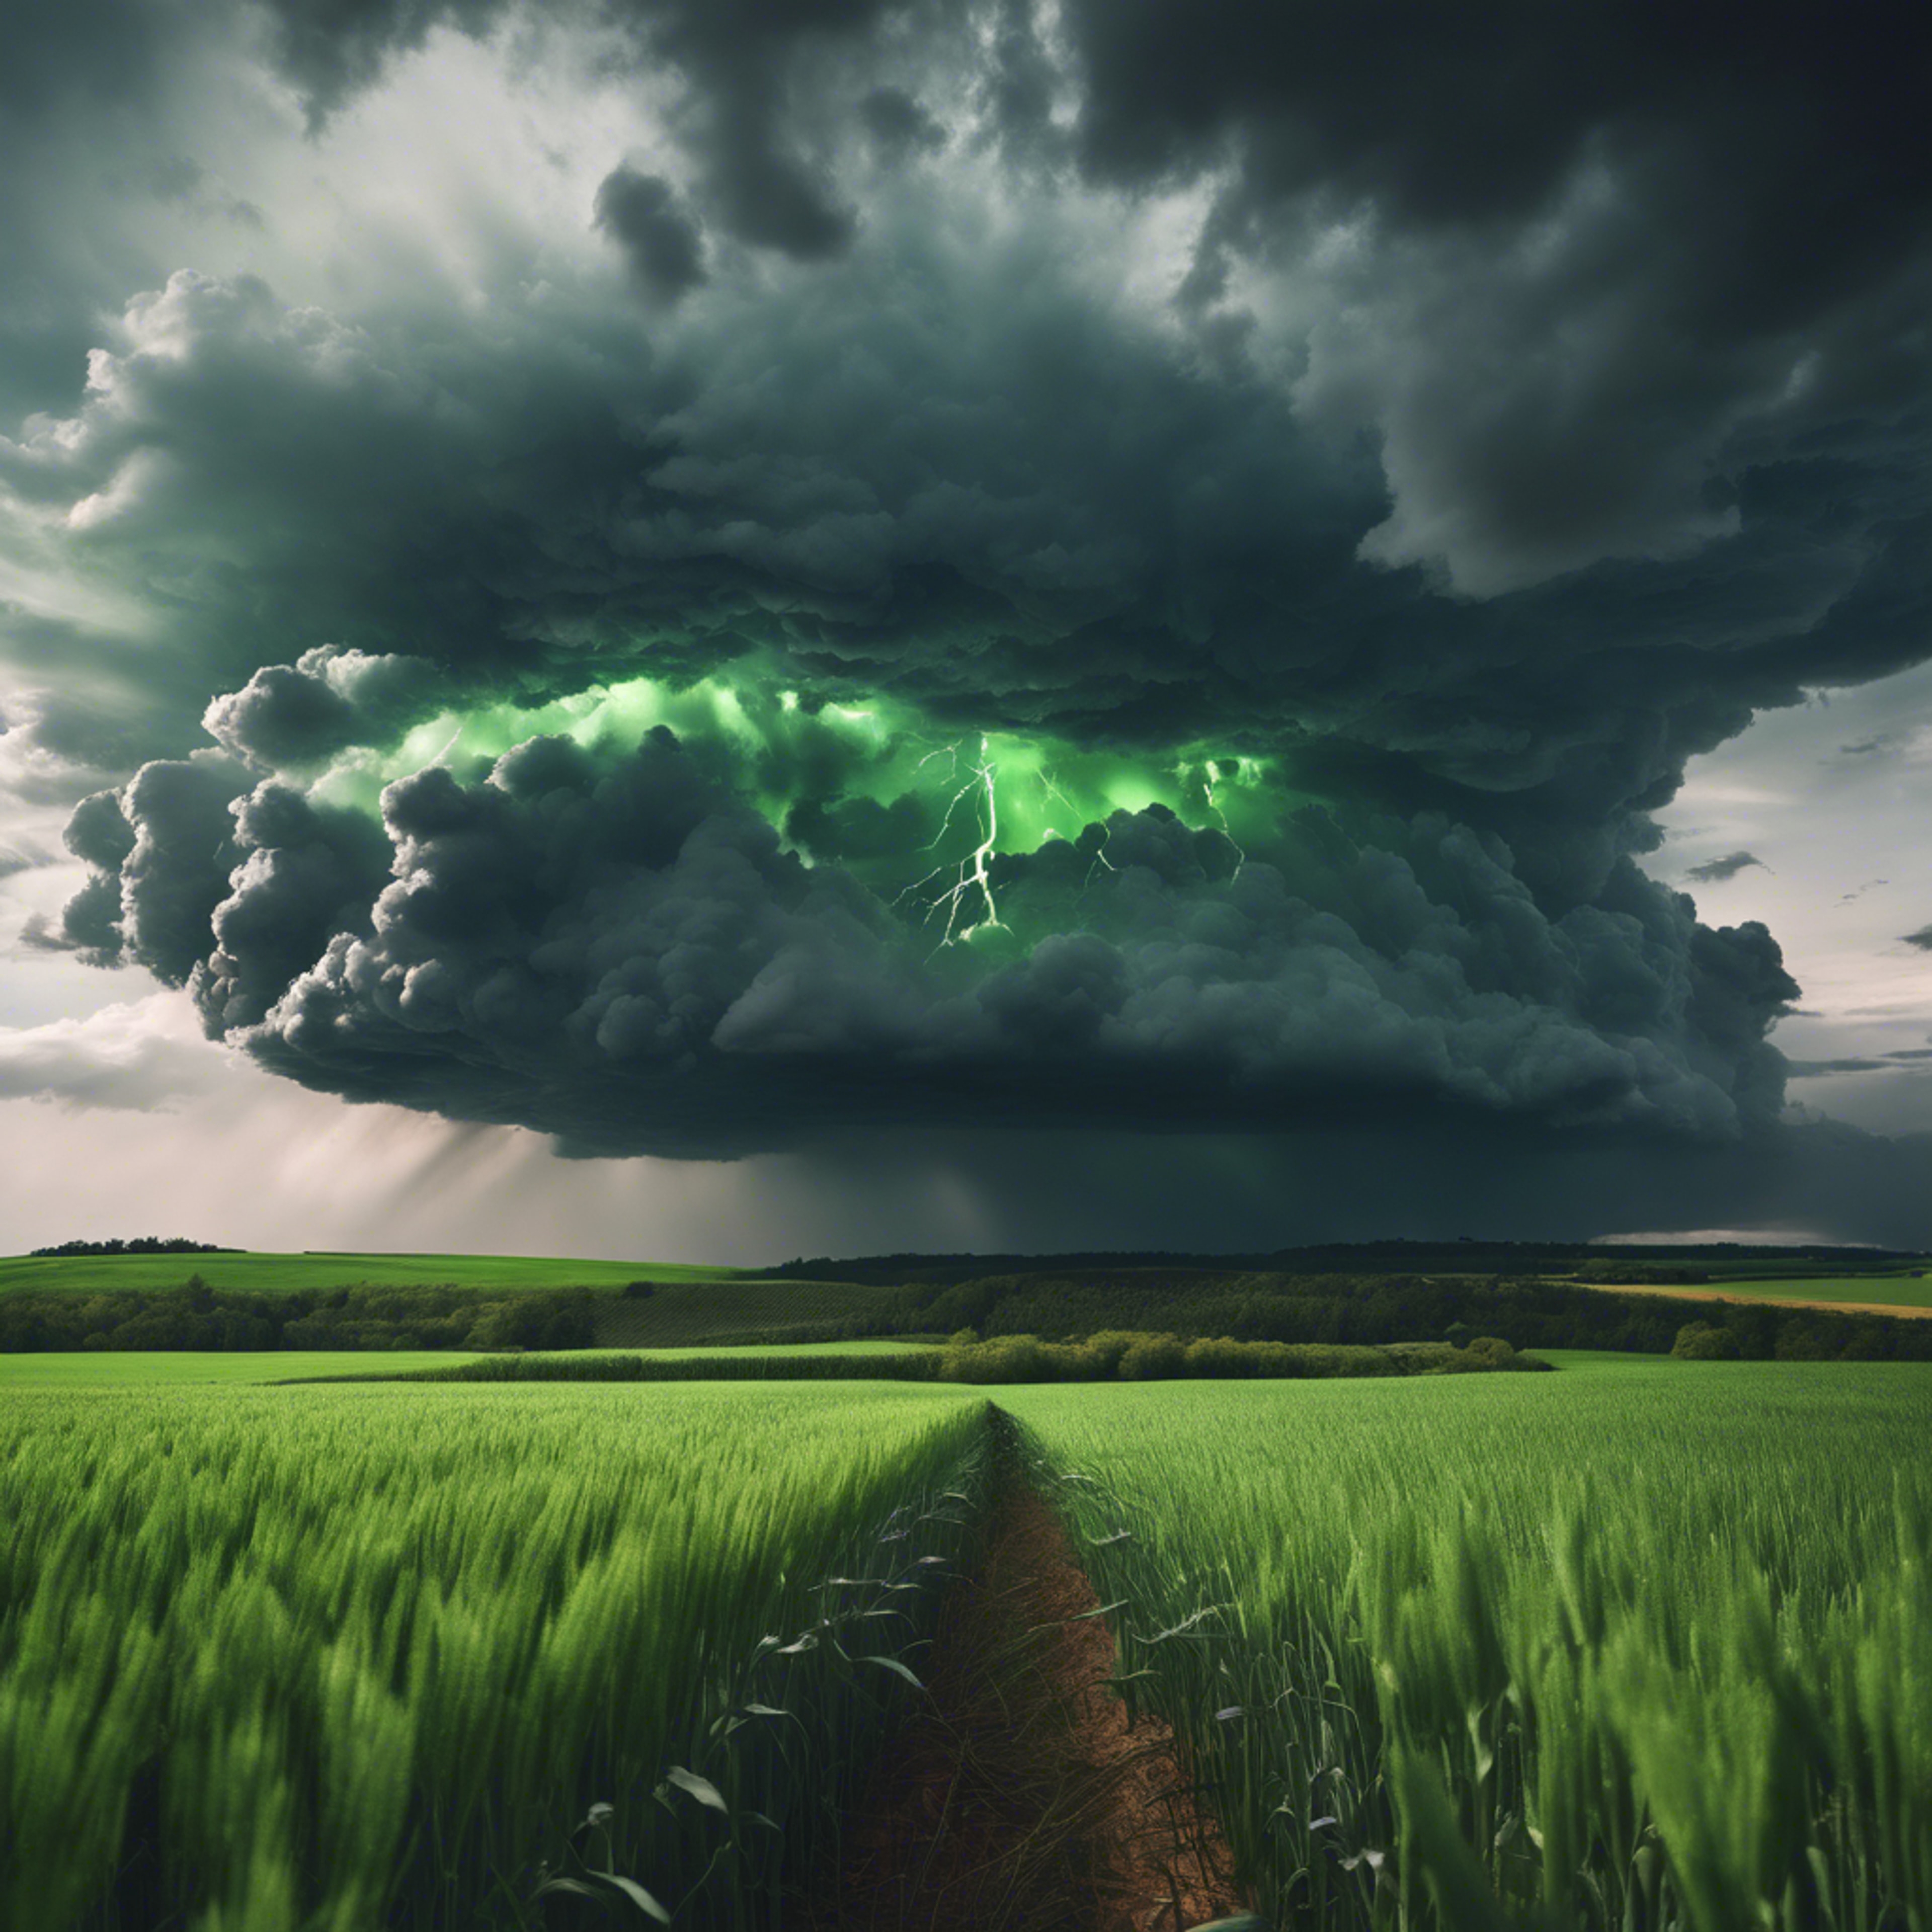 A dramatic black storm cloud over a vibrant green wheat field. Behang[2ef08a34070042519f8d]